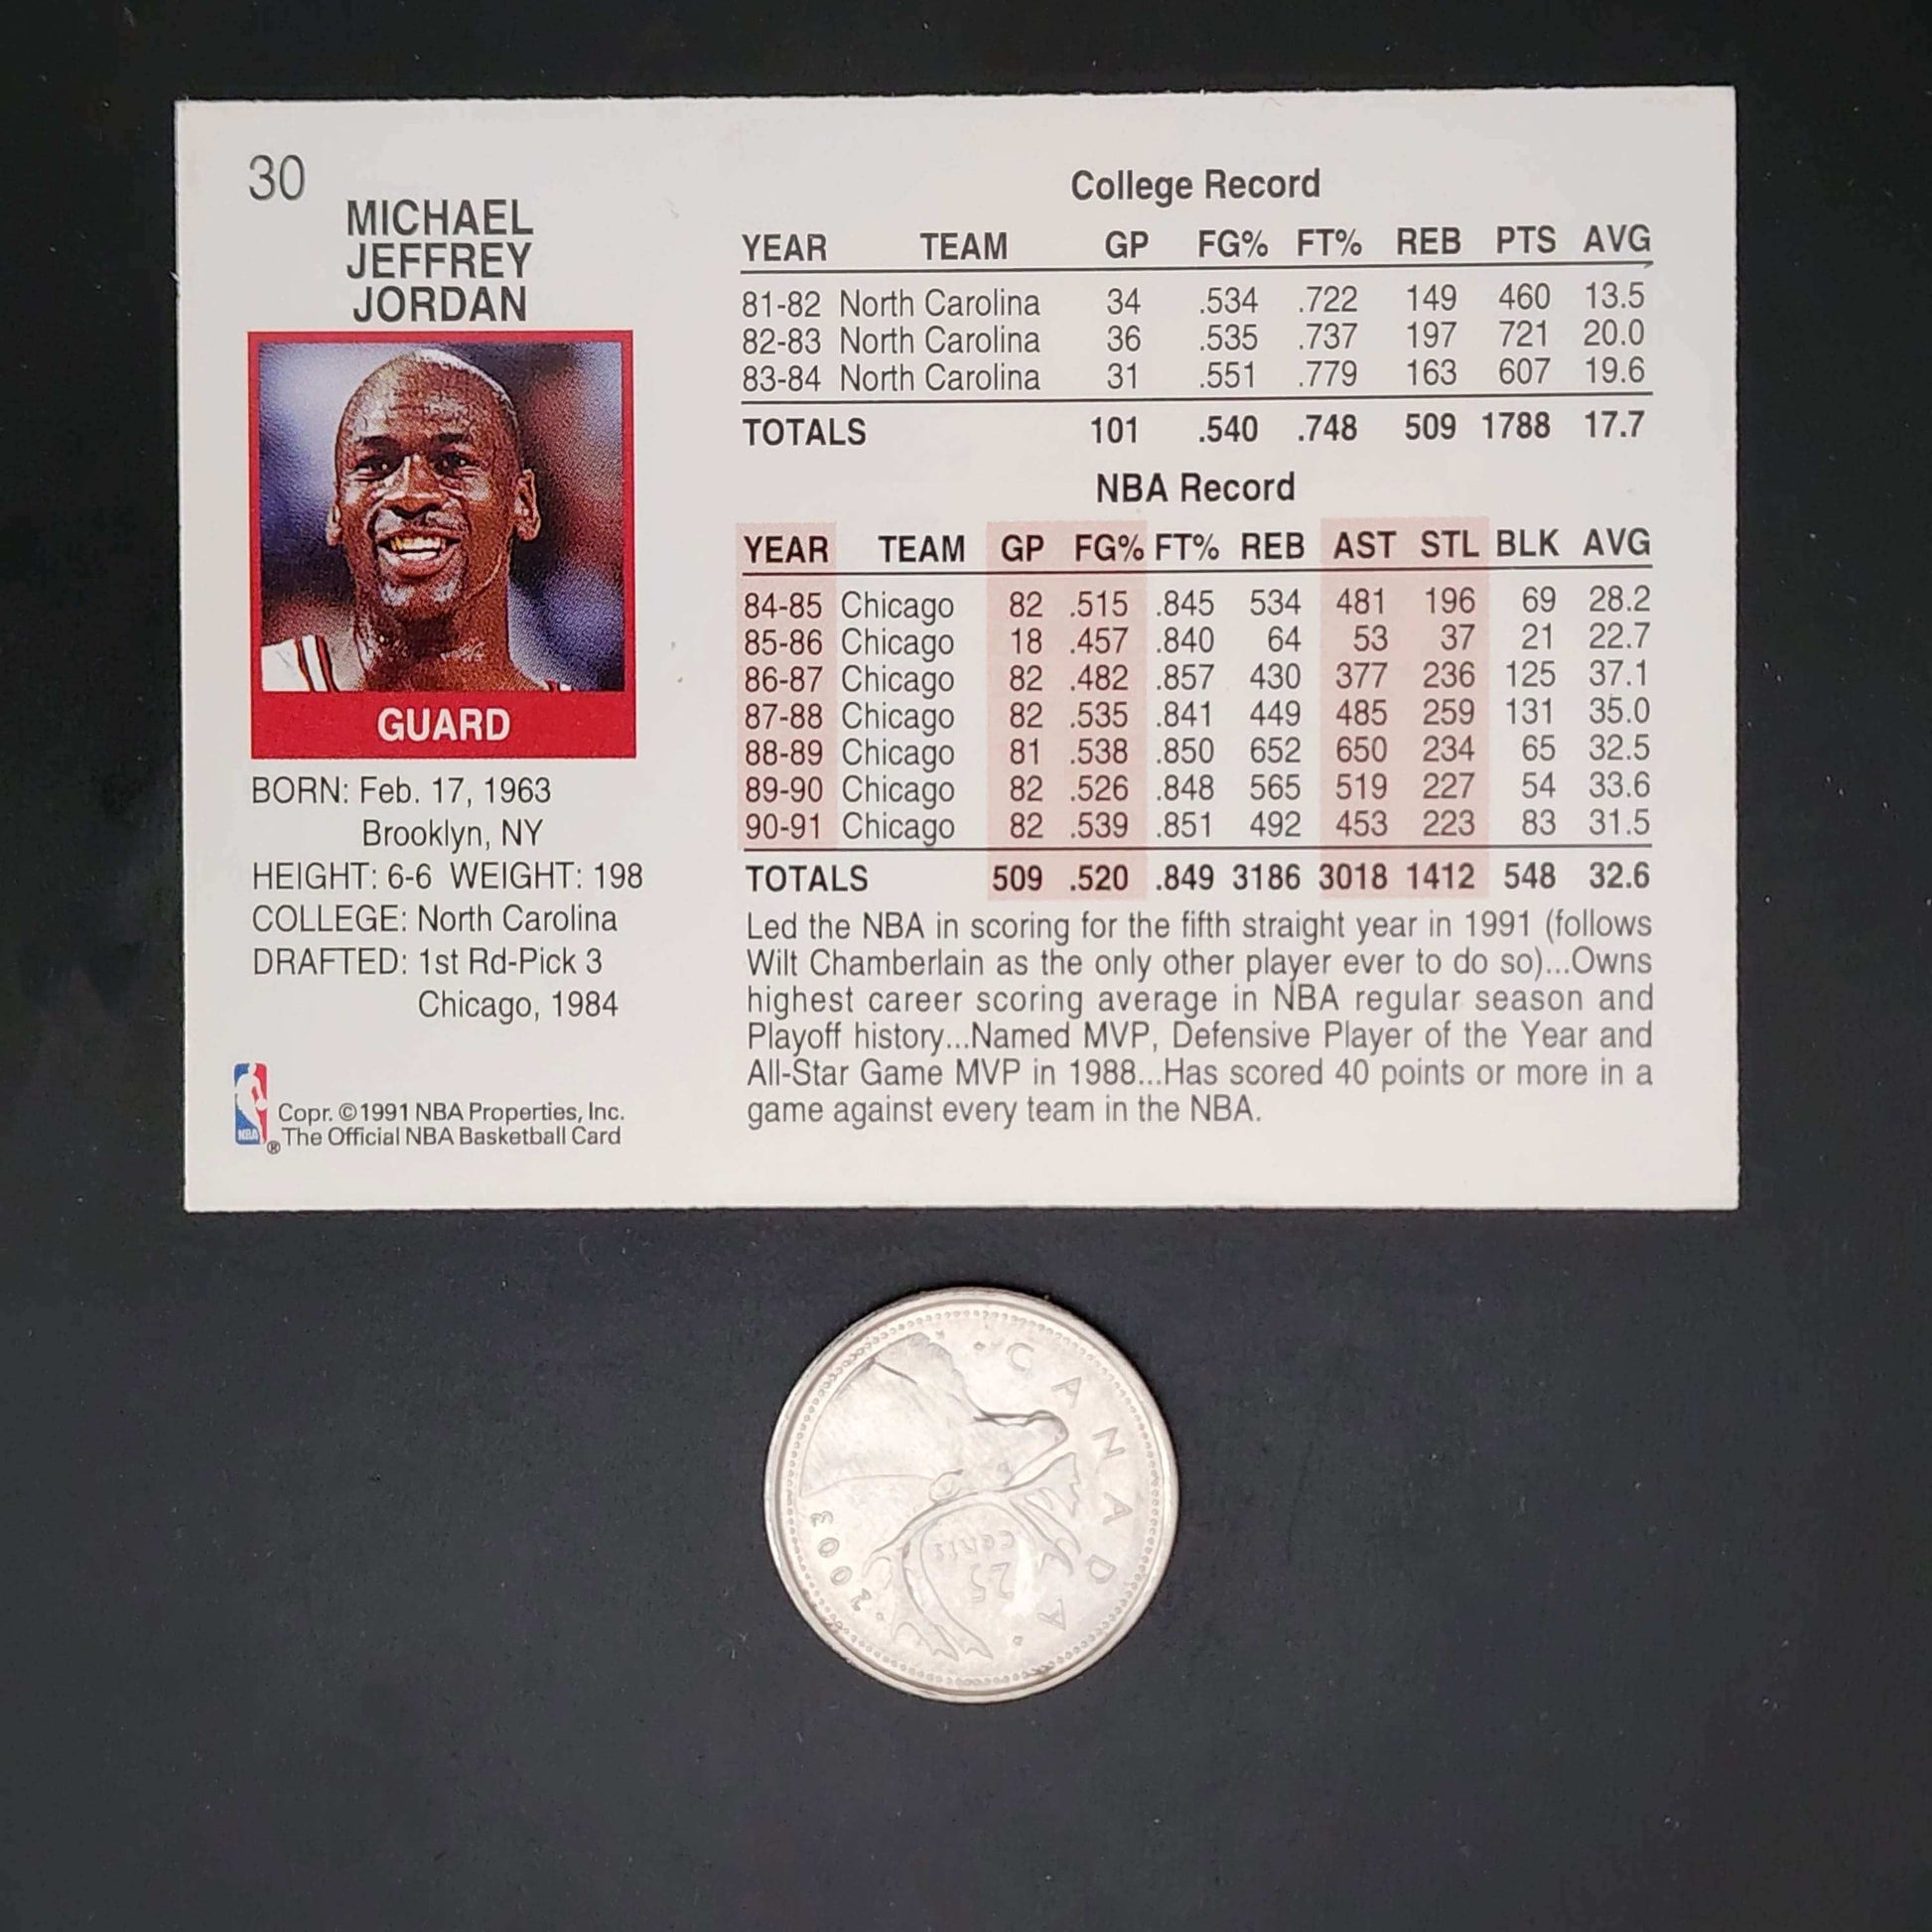 Size comparison of a Michael Jordan basketball card with a quarter.